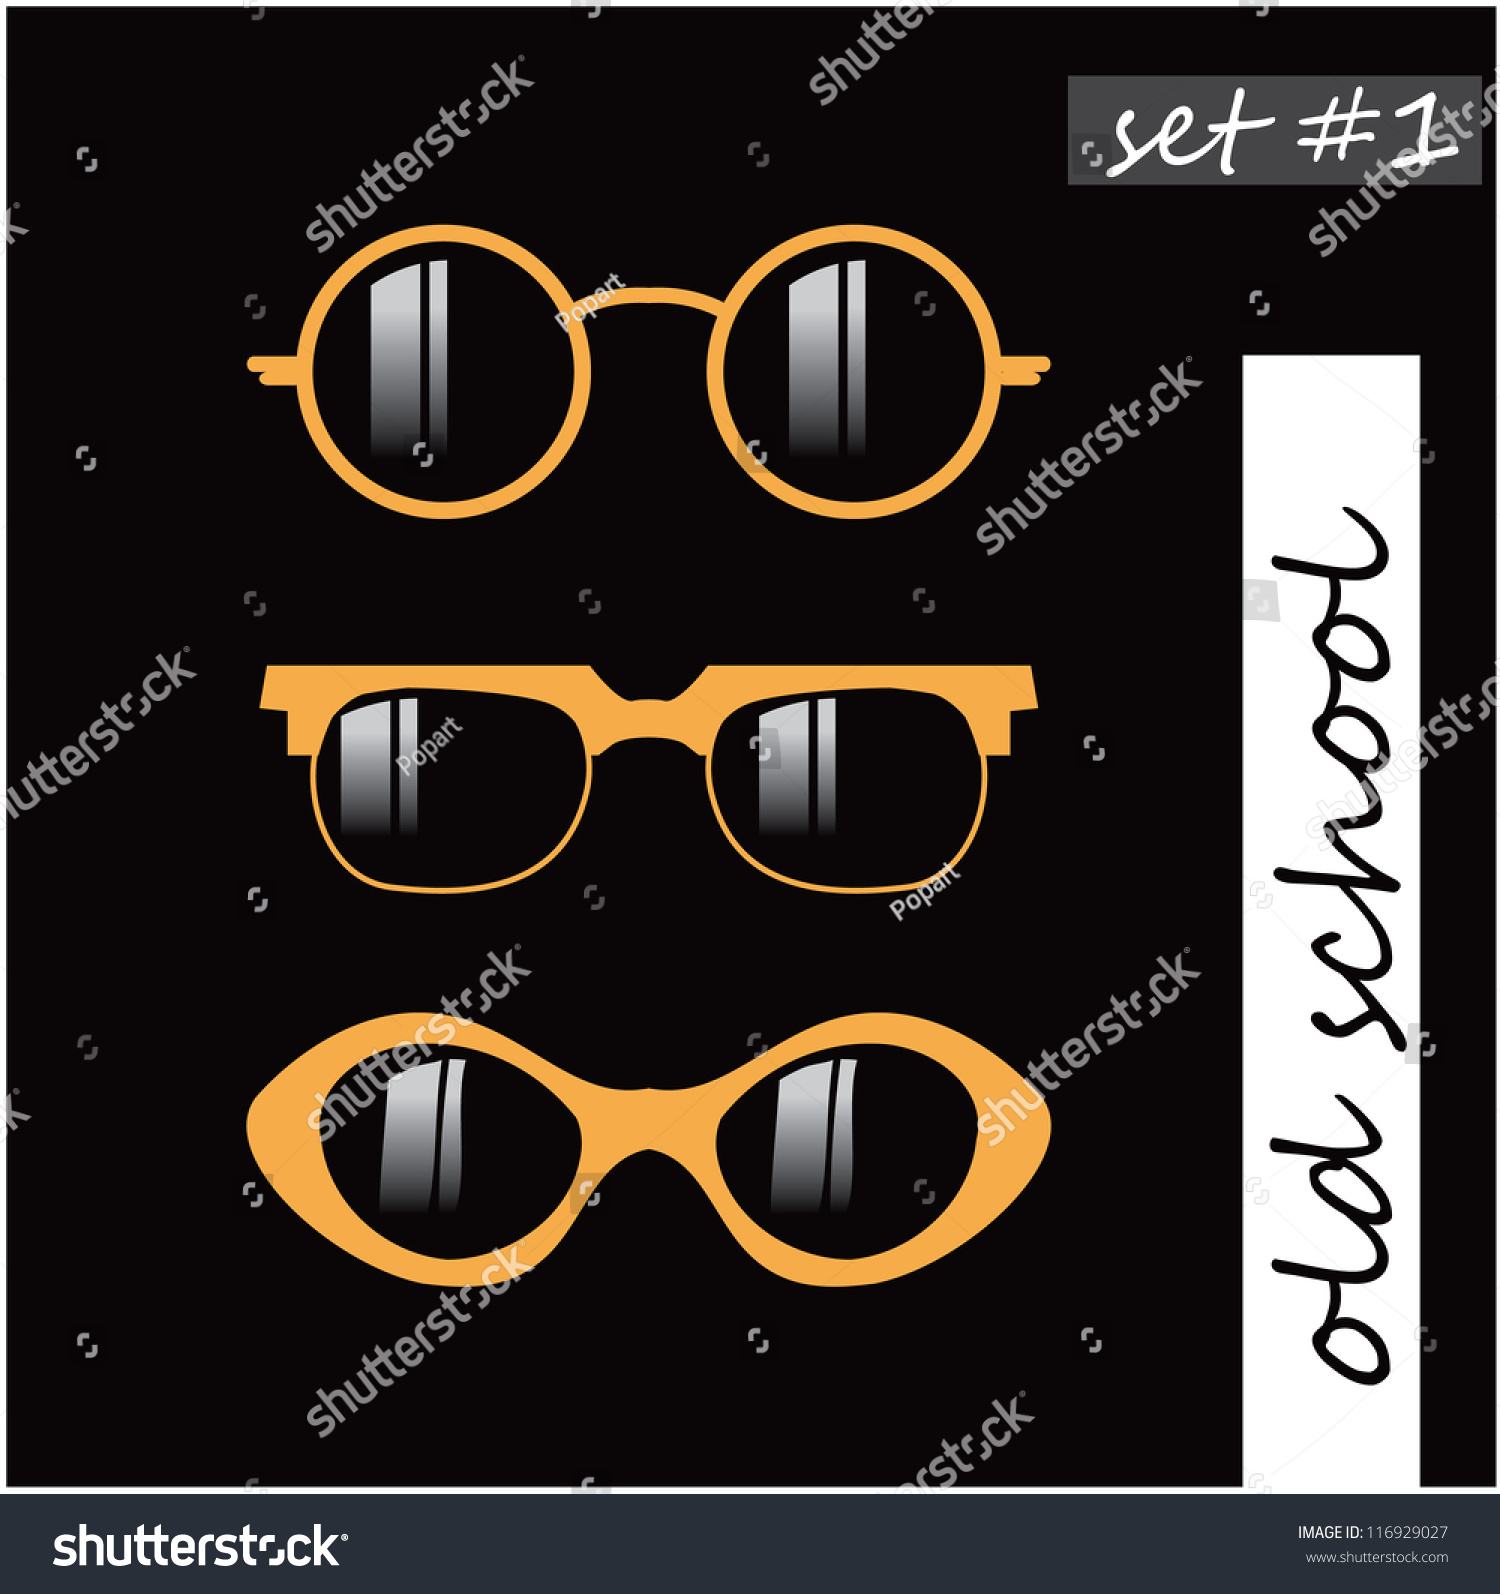 SVG of set of oldschool glasses silhouette svg